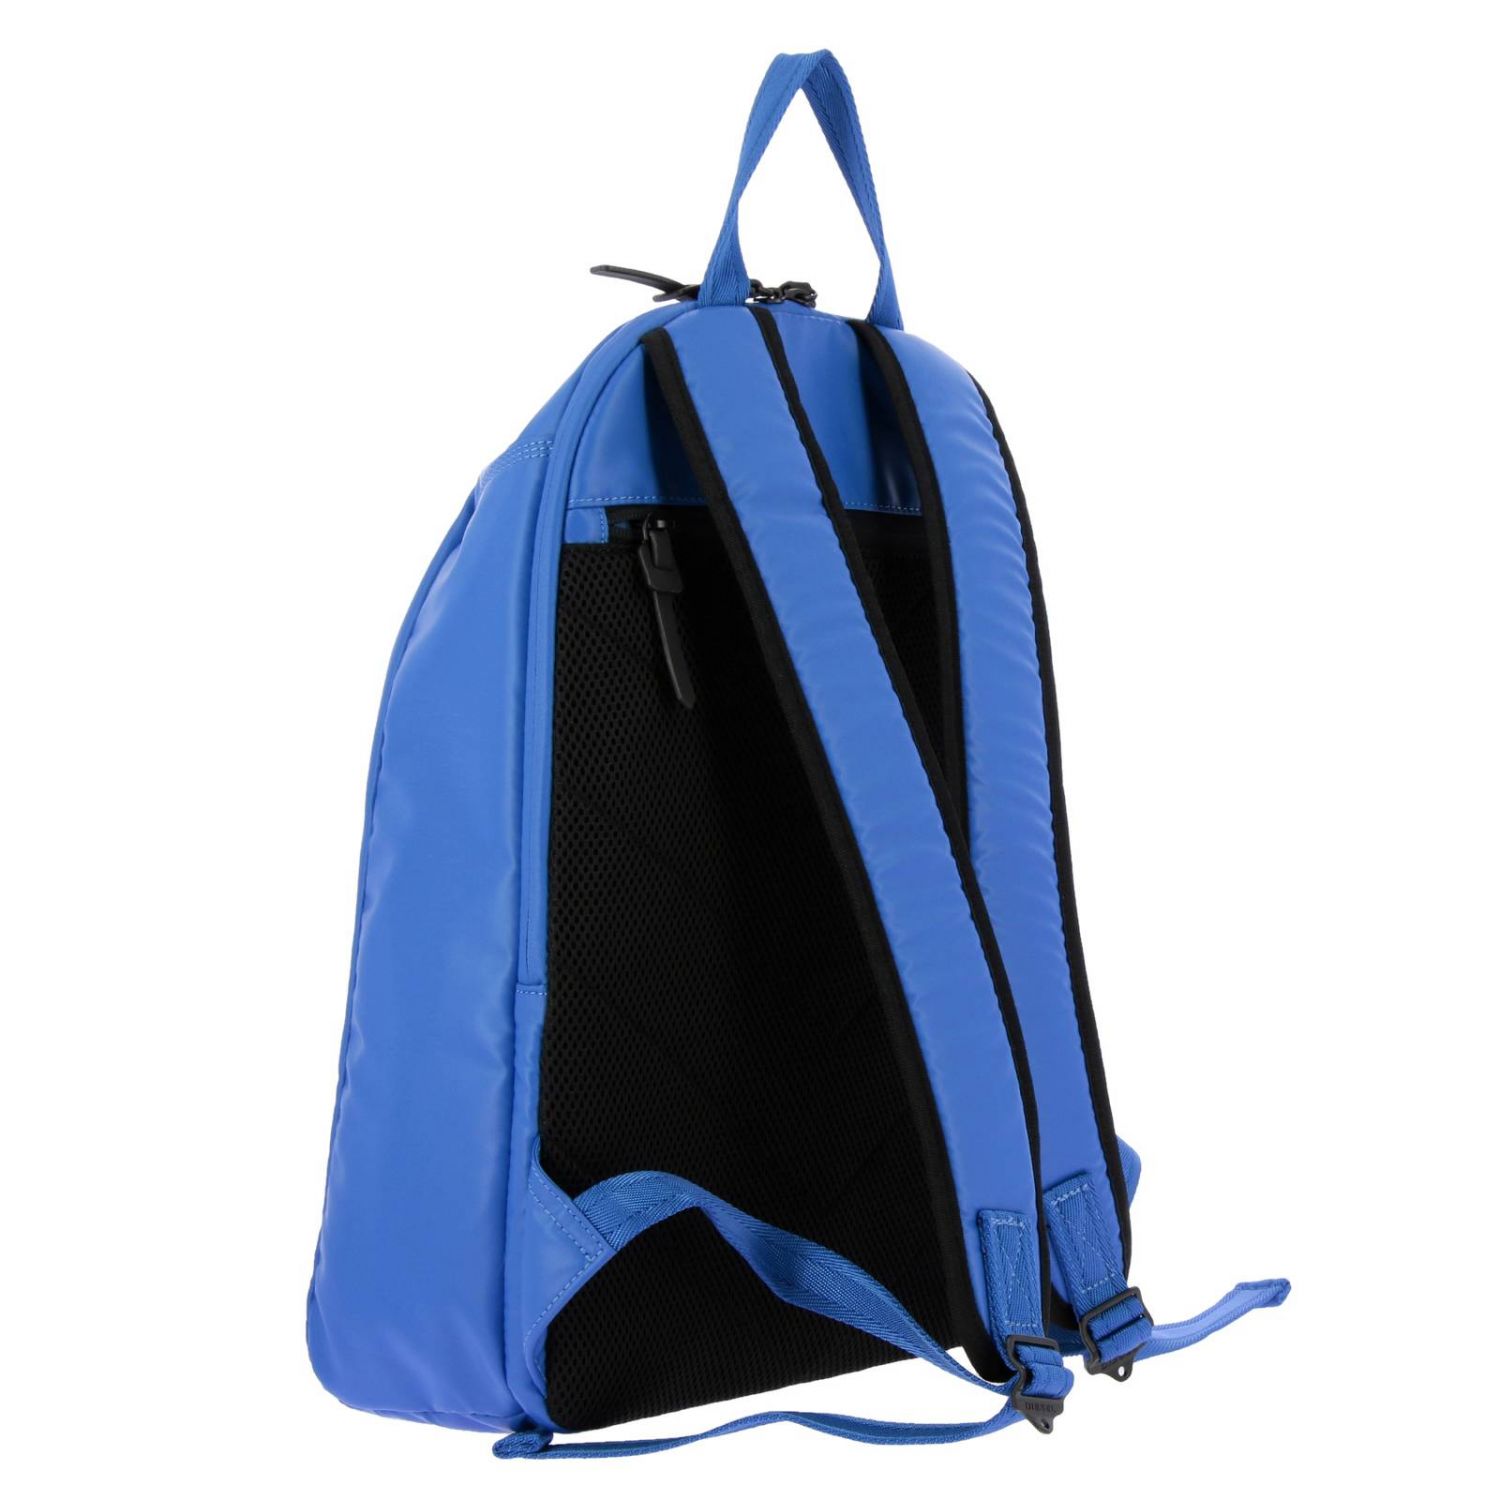 Diesel Outlet: backpack for man - Gnawed Blue | Diesel backpack X05479 ...